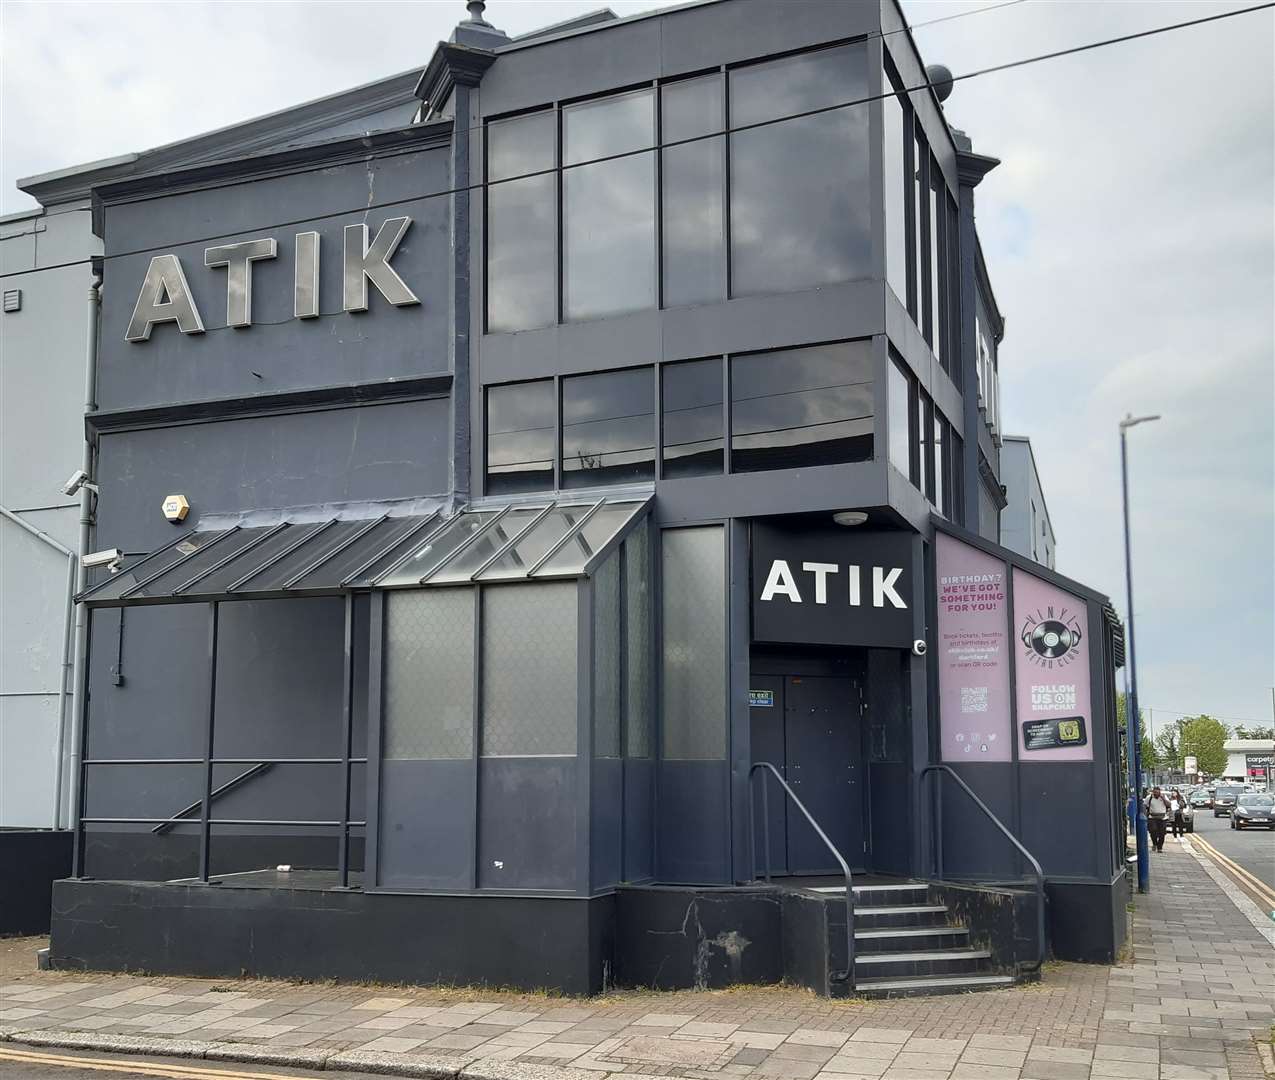 ATIK nightclub in Essex Road, Dartford. Photo: Sean Delaney